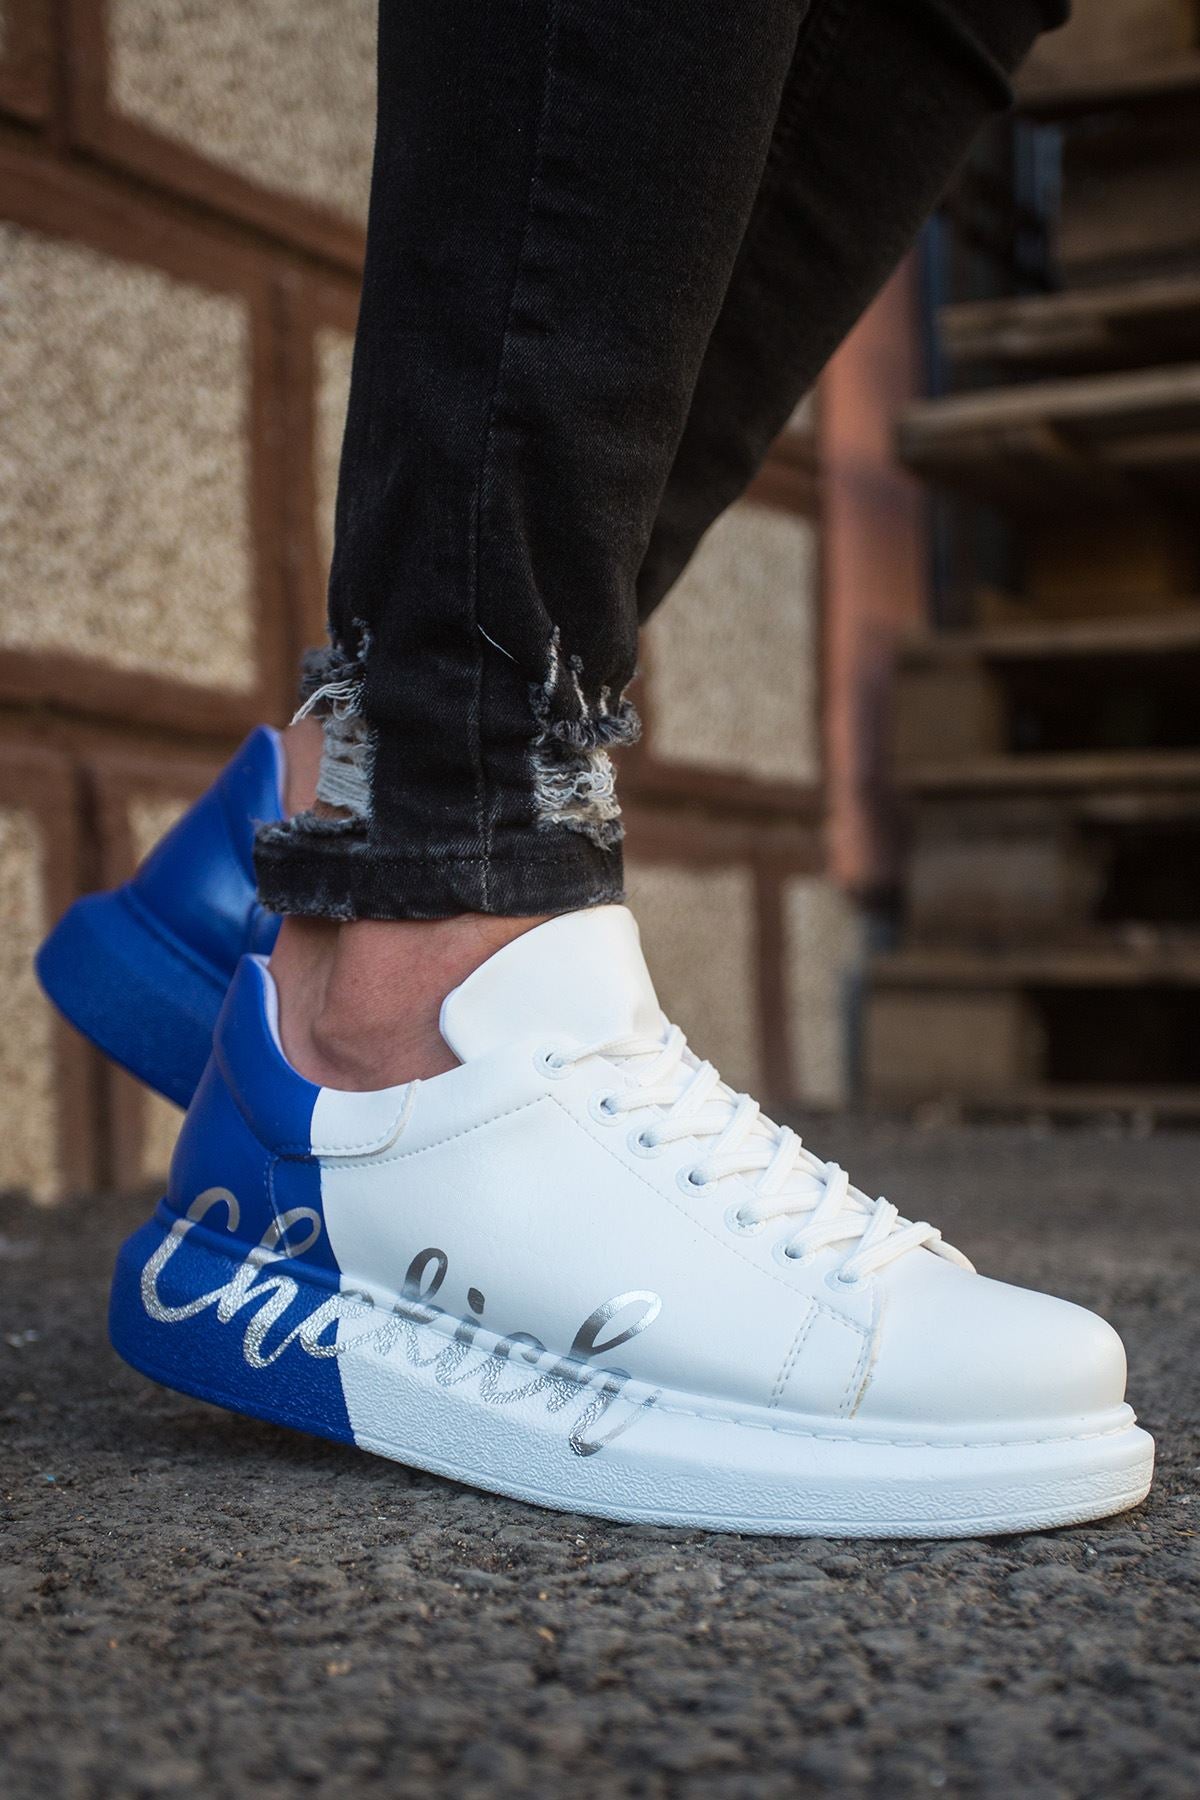 CH254 Men's Unisex White-Blue Casual Sneaker Sports Shoes - STREET MODE ™